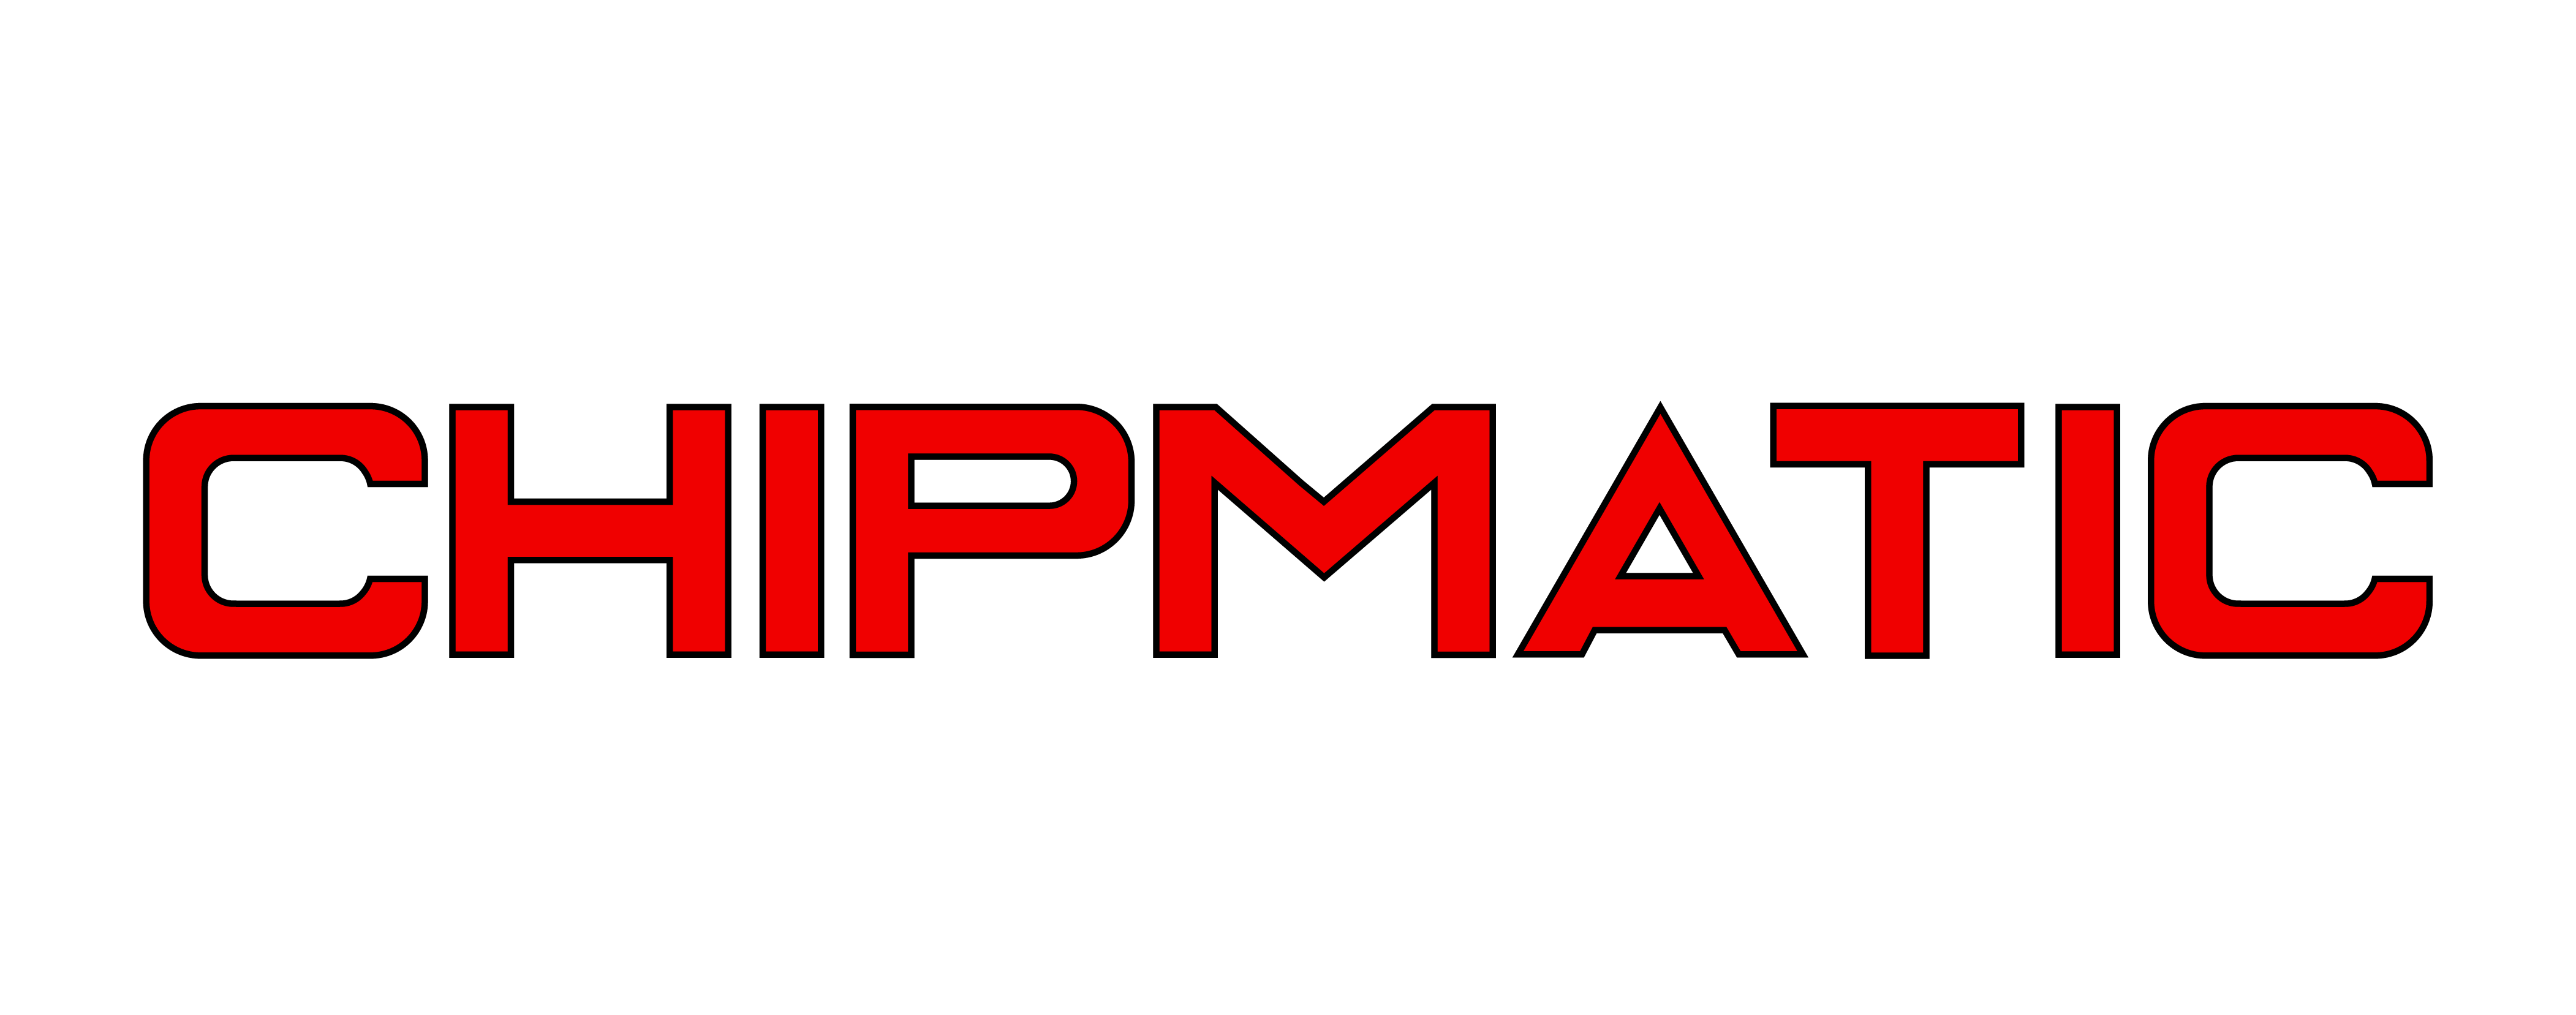 THE CHIPMATIC COMPANY Logo